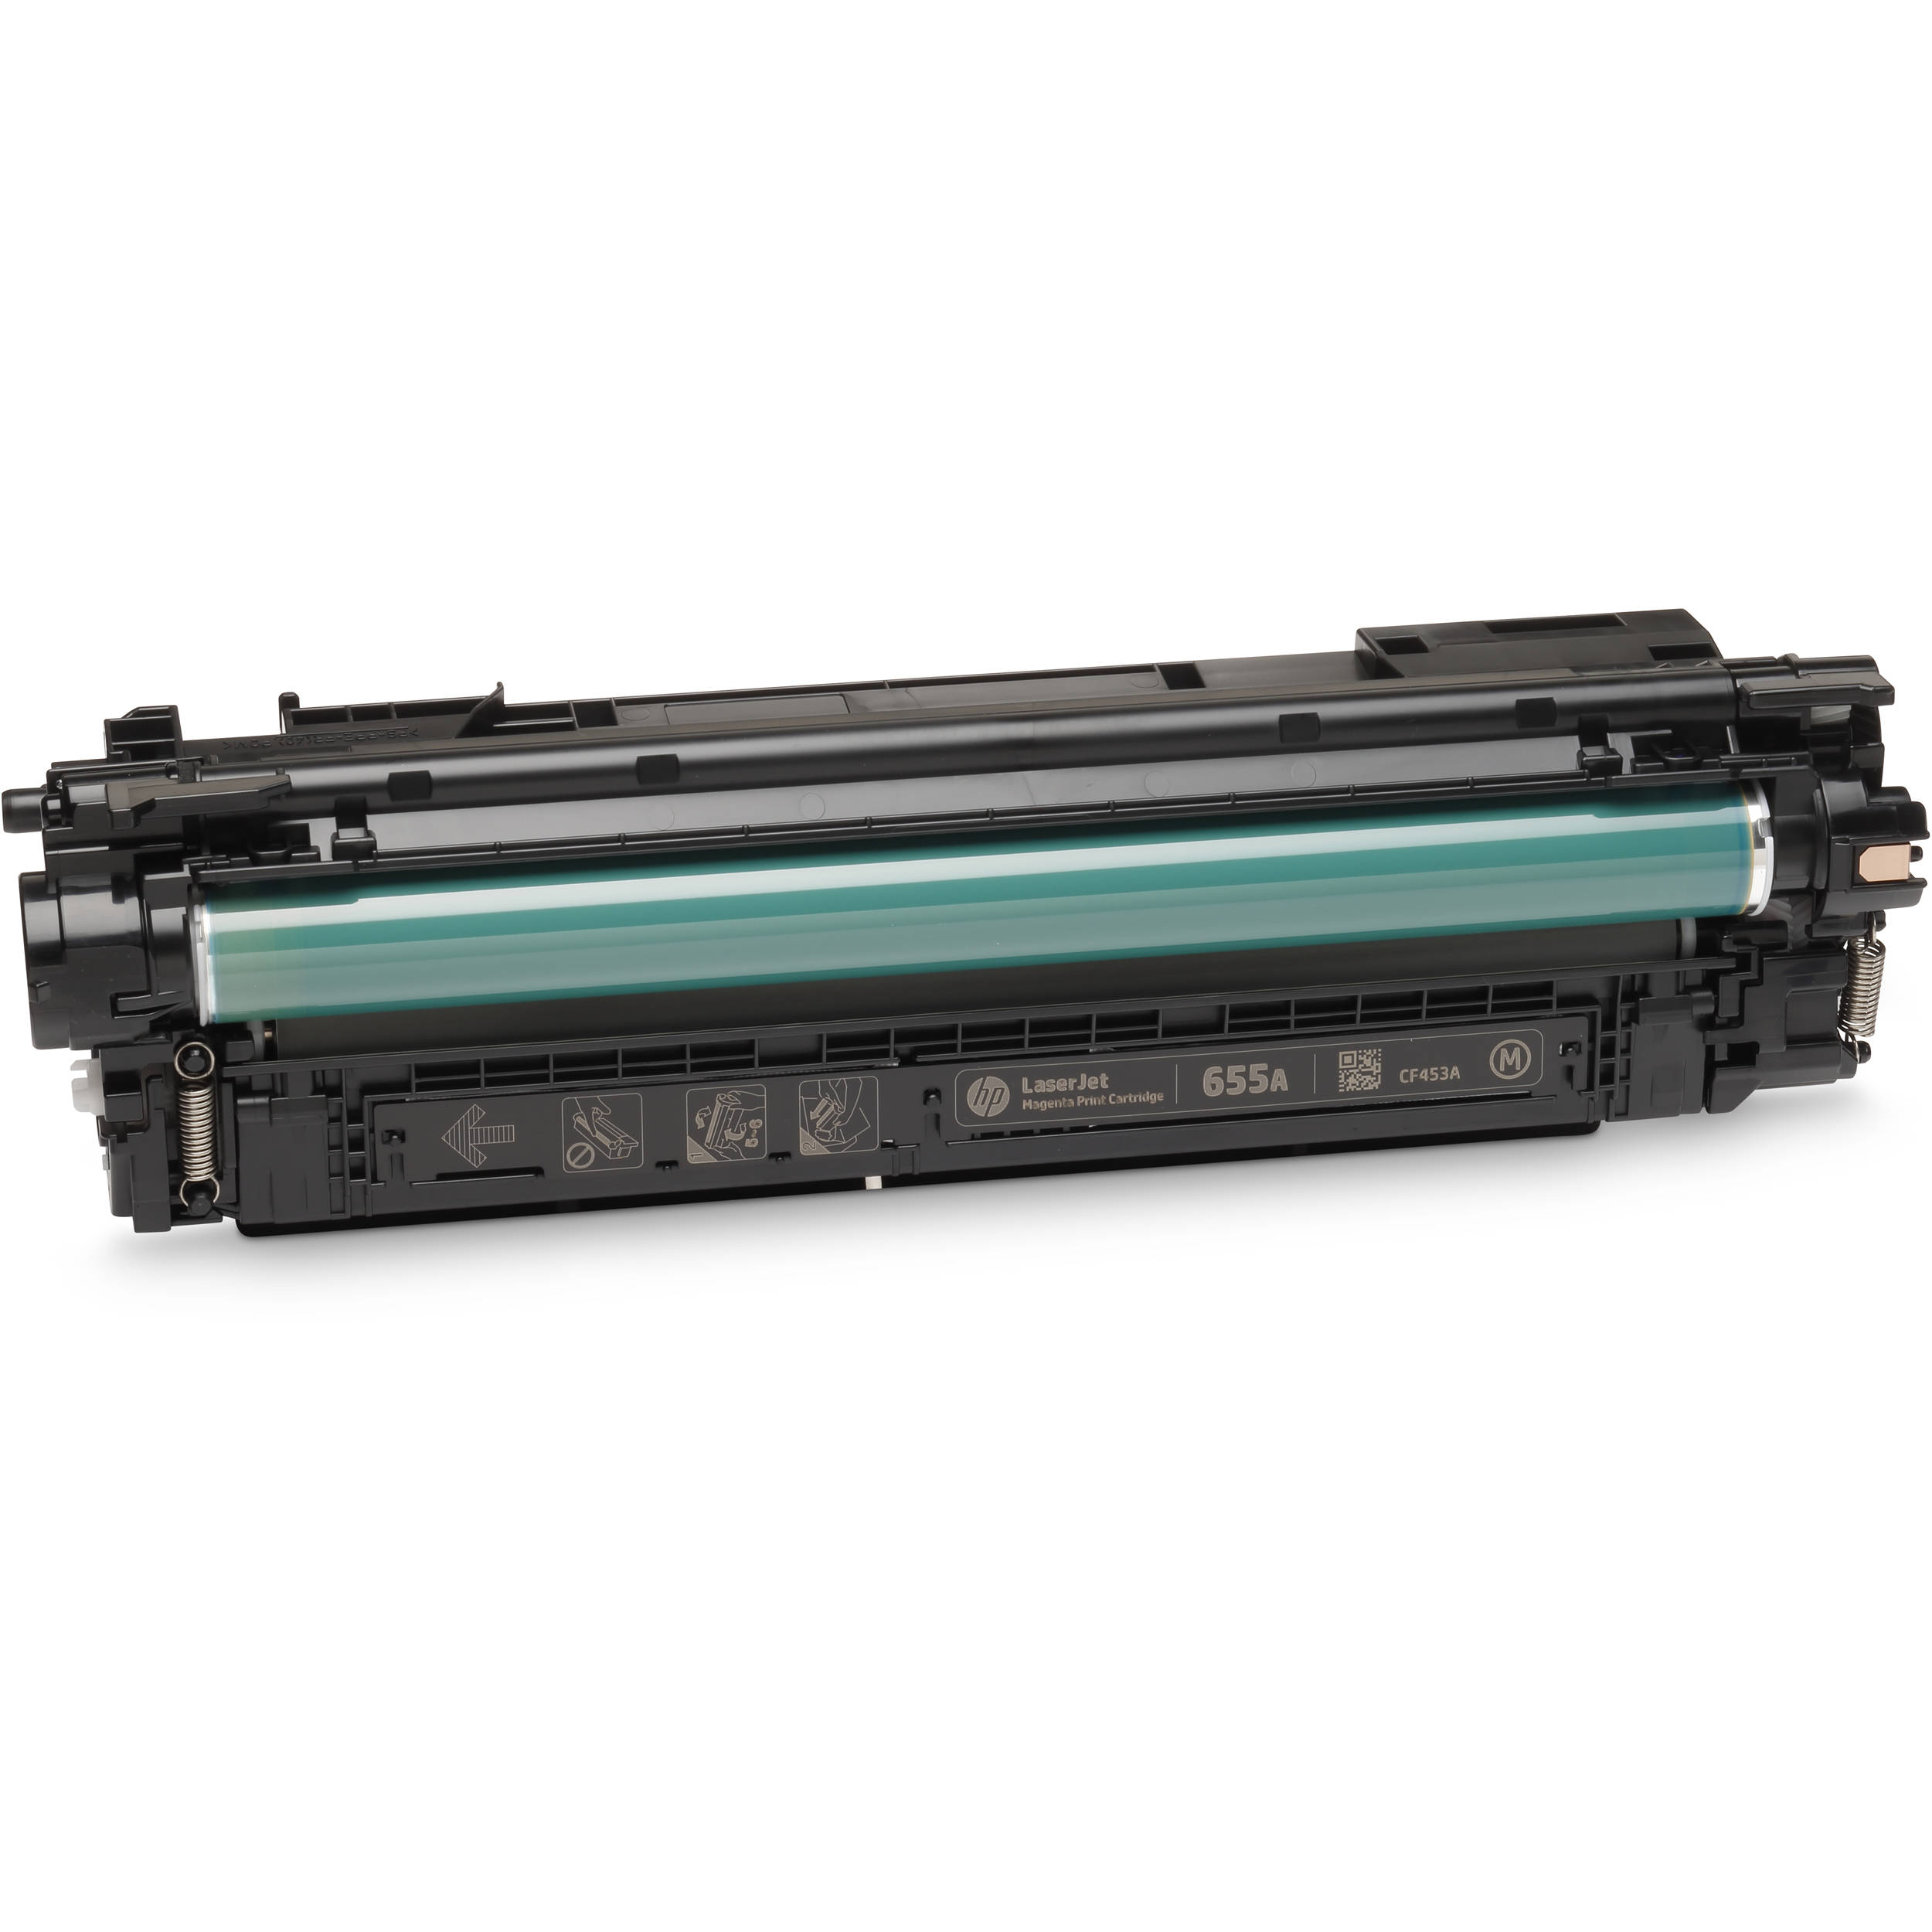 HP 655A LaserJet Enterprise Magenta Toner Cartridge